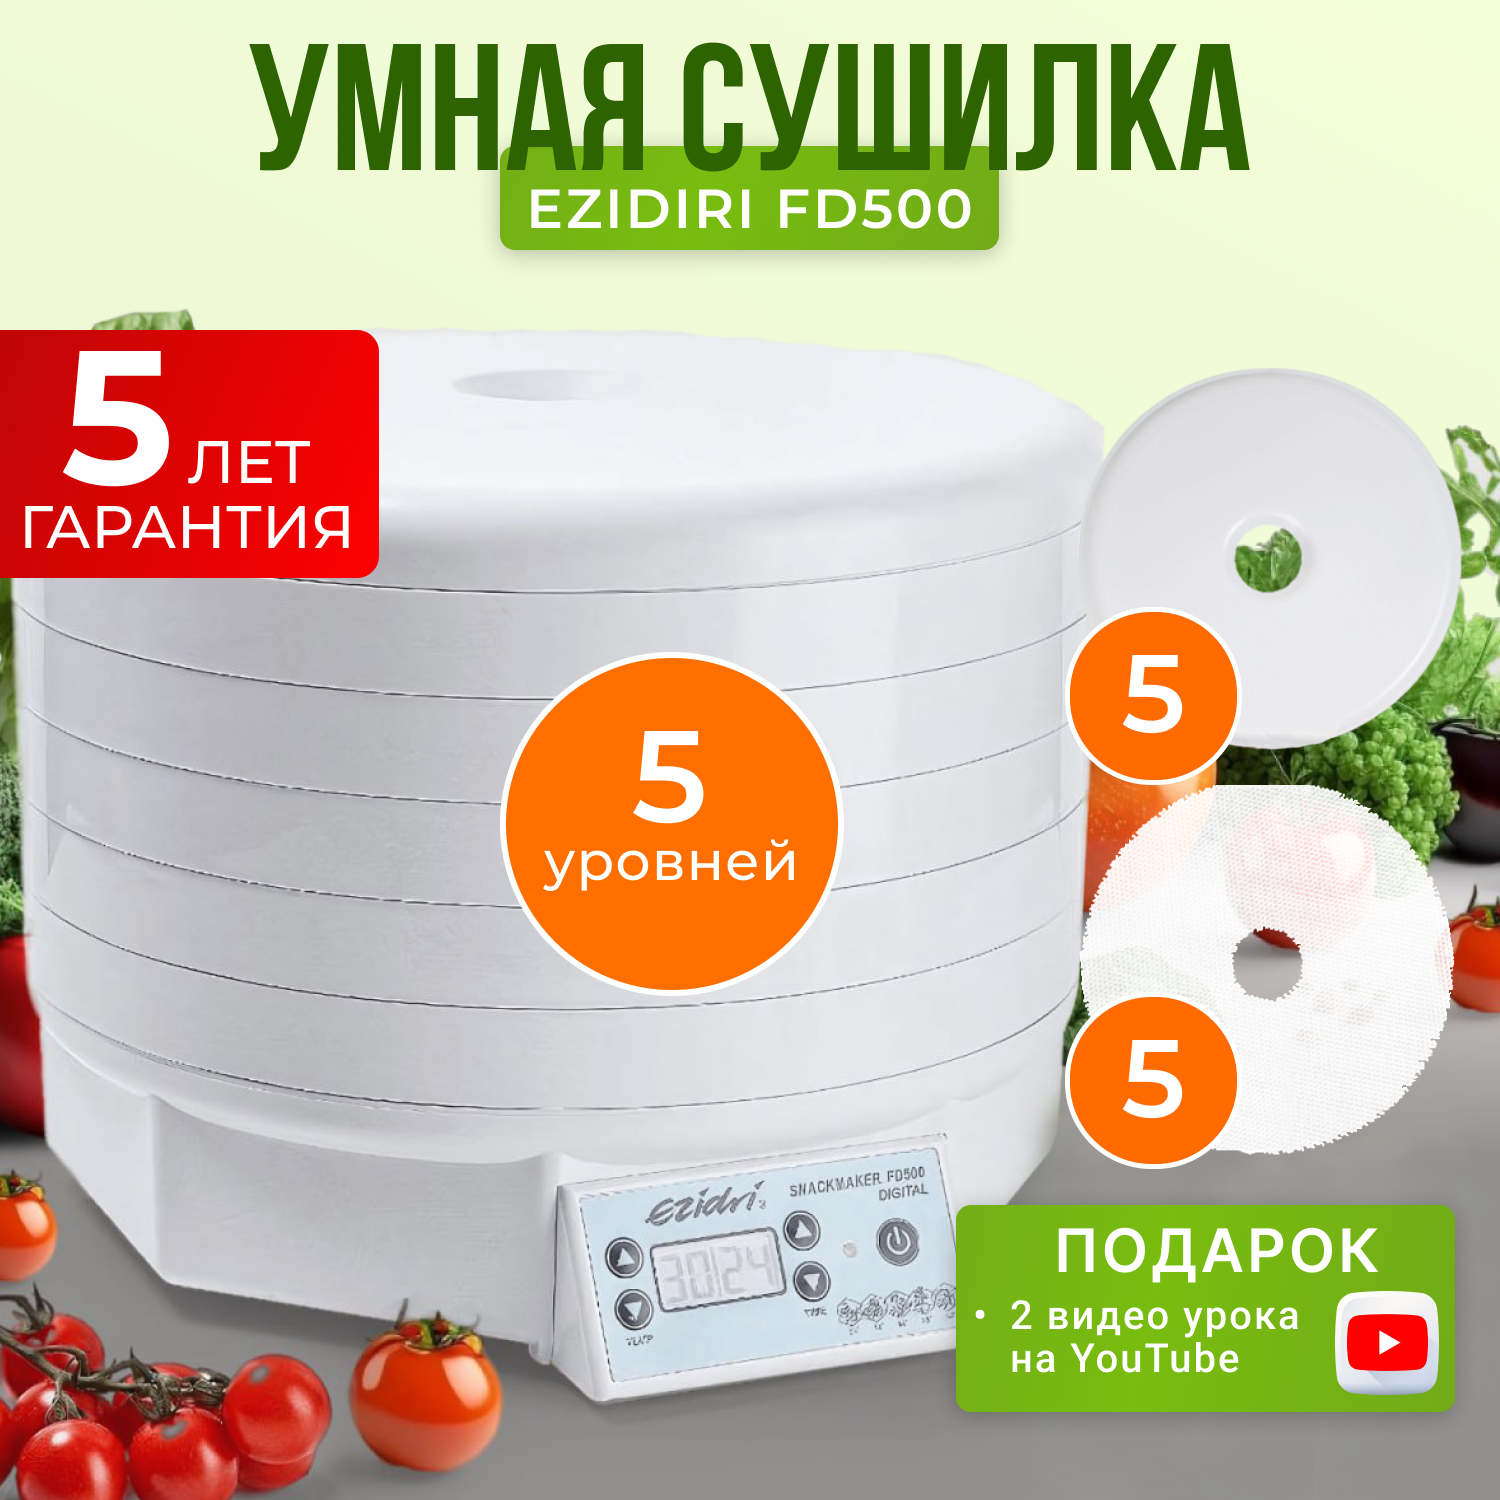 Сушилка для овощей и фруктов Ezidri FD500 с 5 поддонами и 10 листами сушилка для овощей и фруктов ezidri fd500 с 5 поддонами и 10 листами